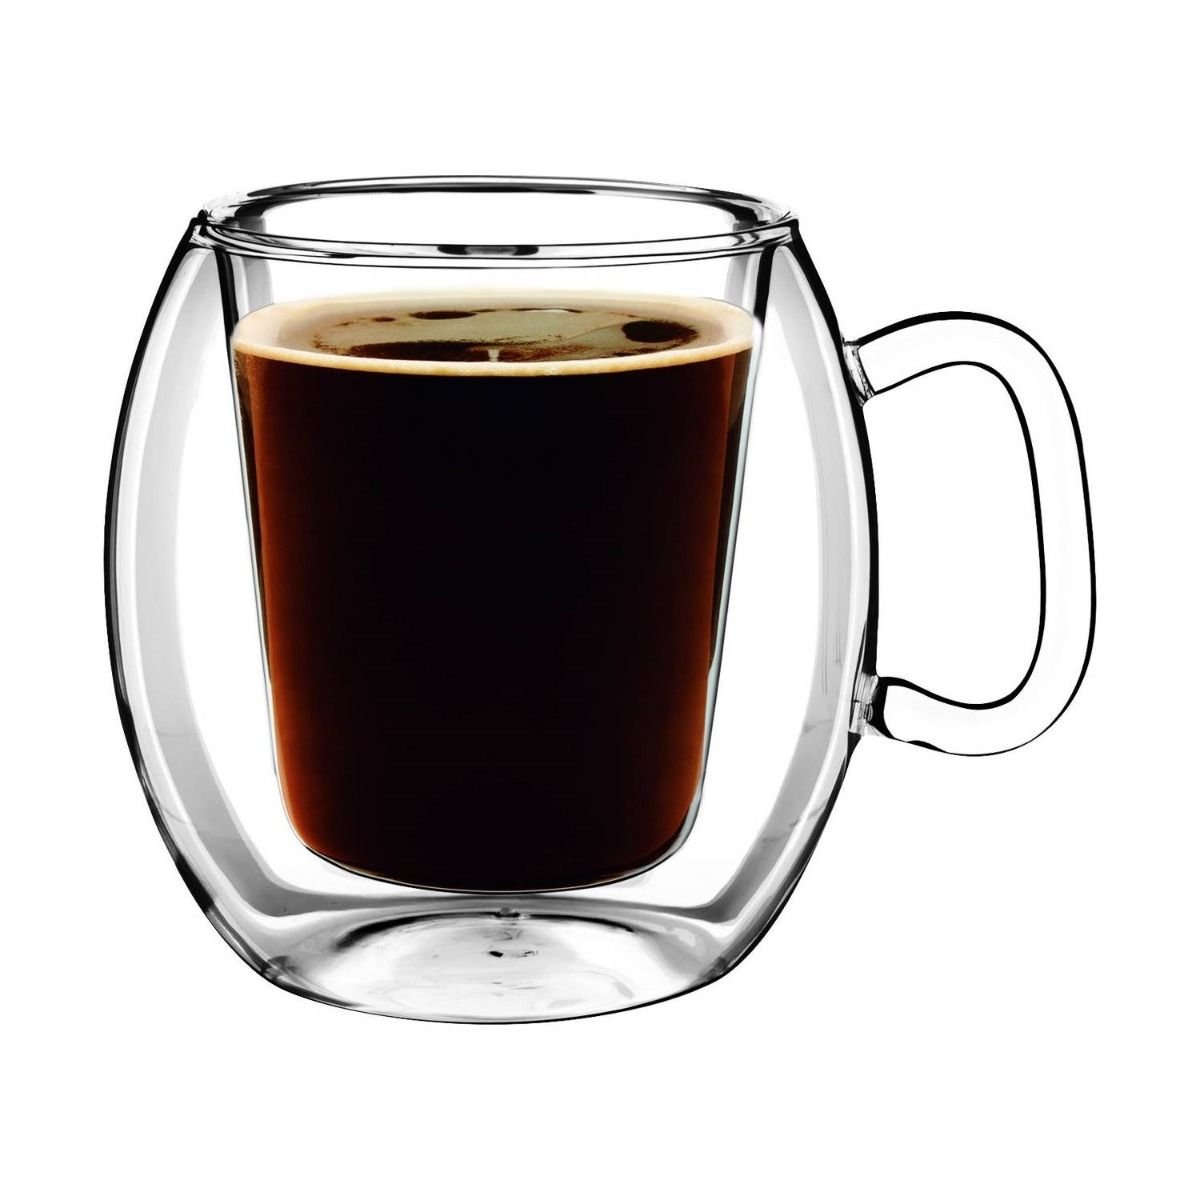 https://cdn.everythingkitchens.com/media/catalog/product/cache/70d878061ea71e5b62358b2b67547186/l/u/luigi-bormioli-thermic-cafe-mug-for-coffee-and-espresso-set-of-two-10973-01_1-cropped_2.jpg